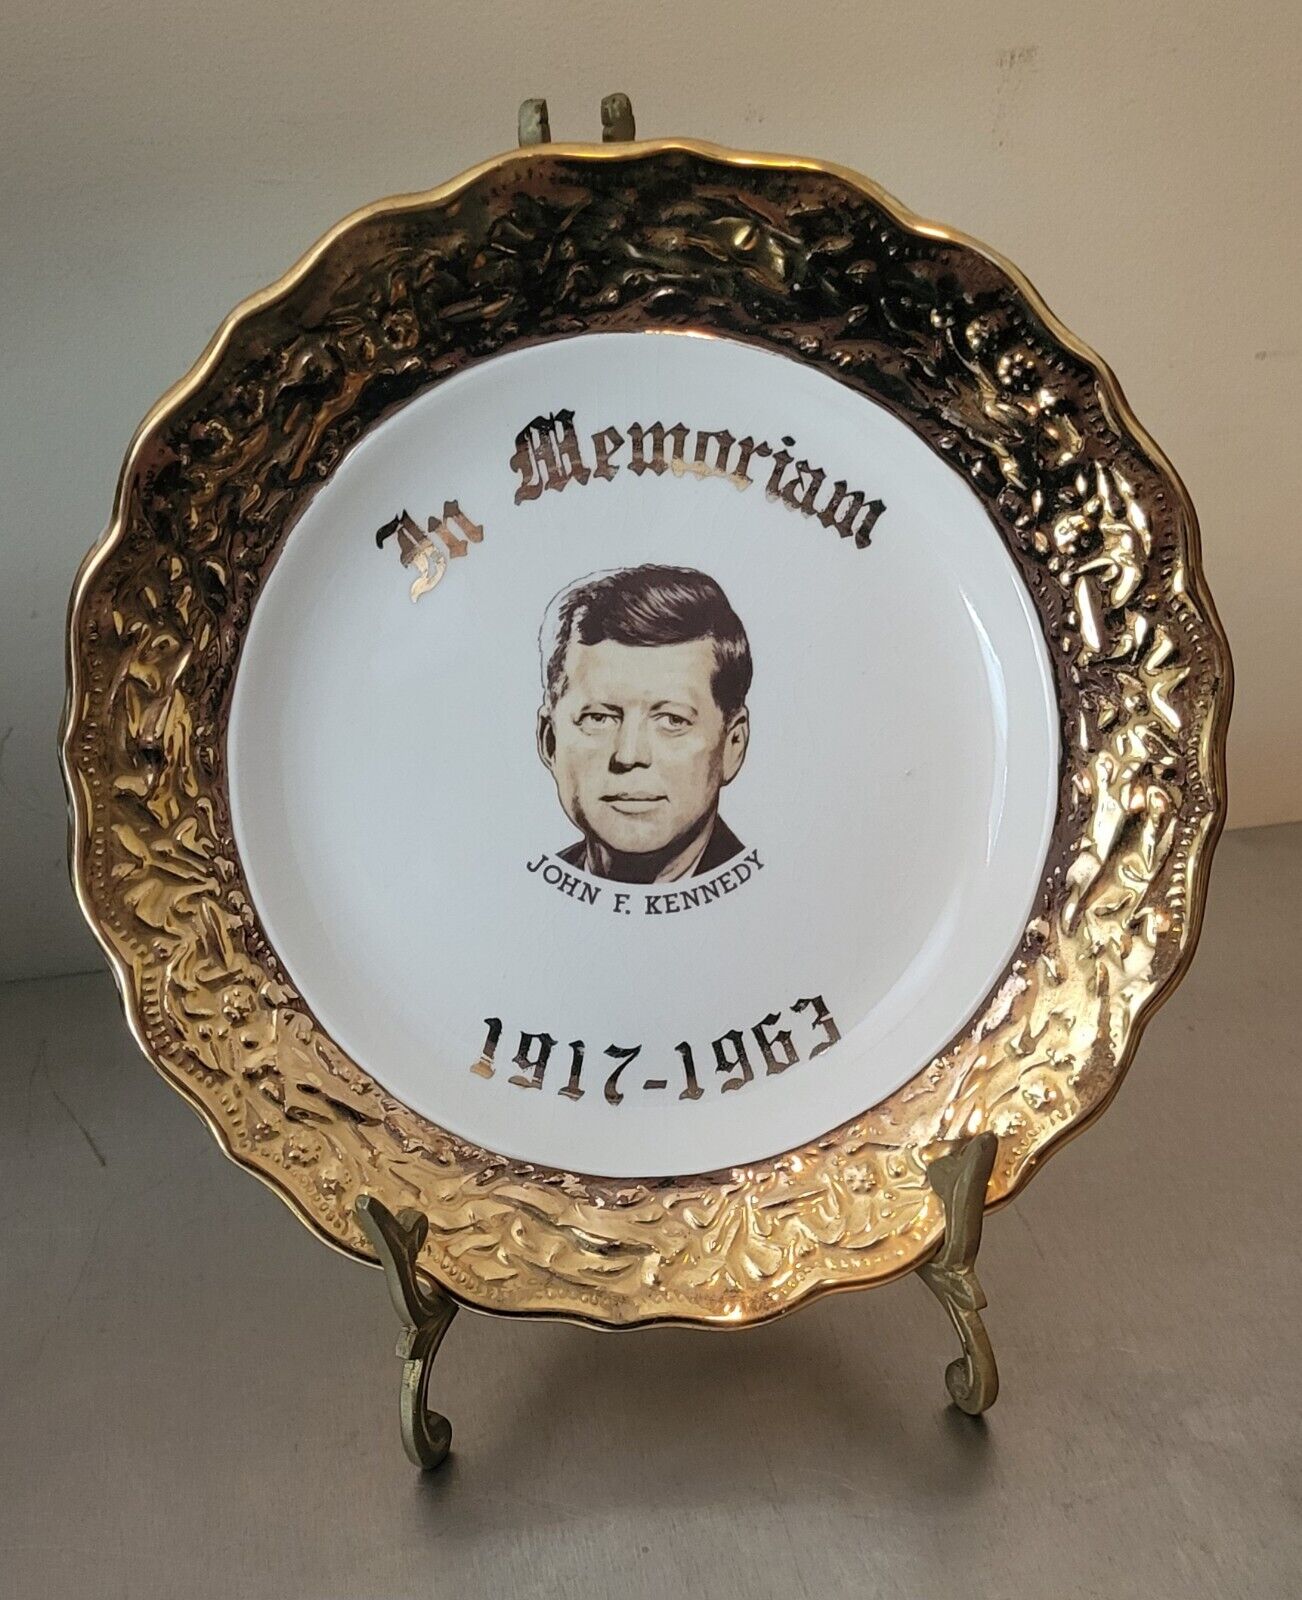 Vintage, In Memoriam President John F. Kennedy 1917-1963 Gold Trim Plate 7”